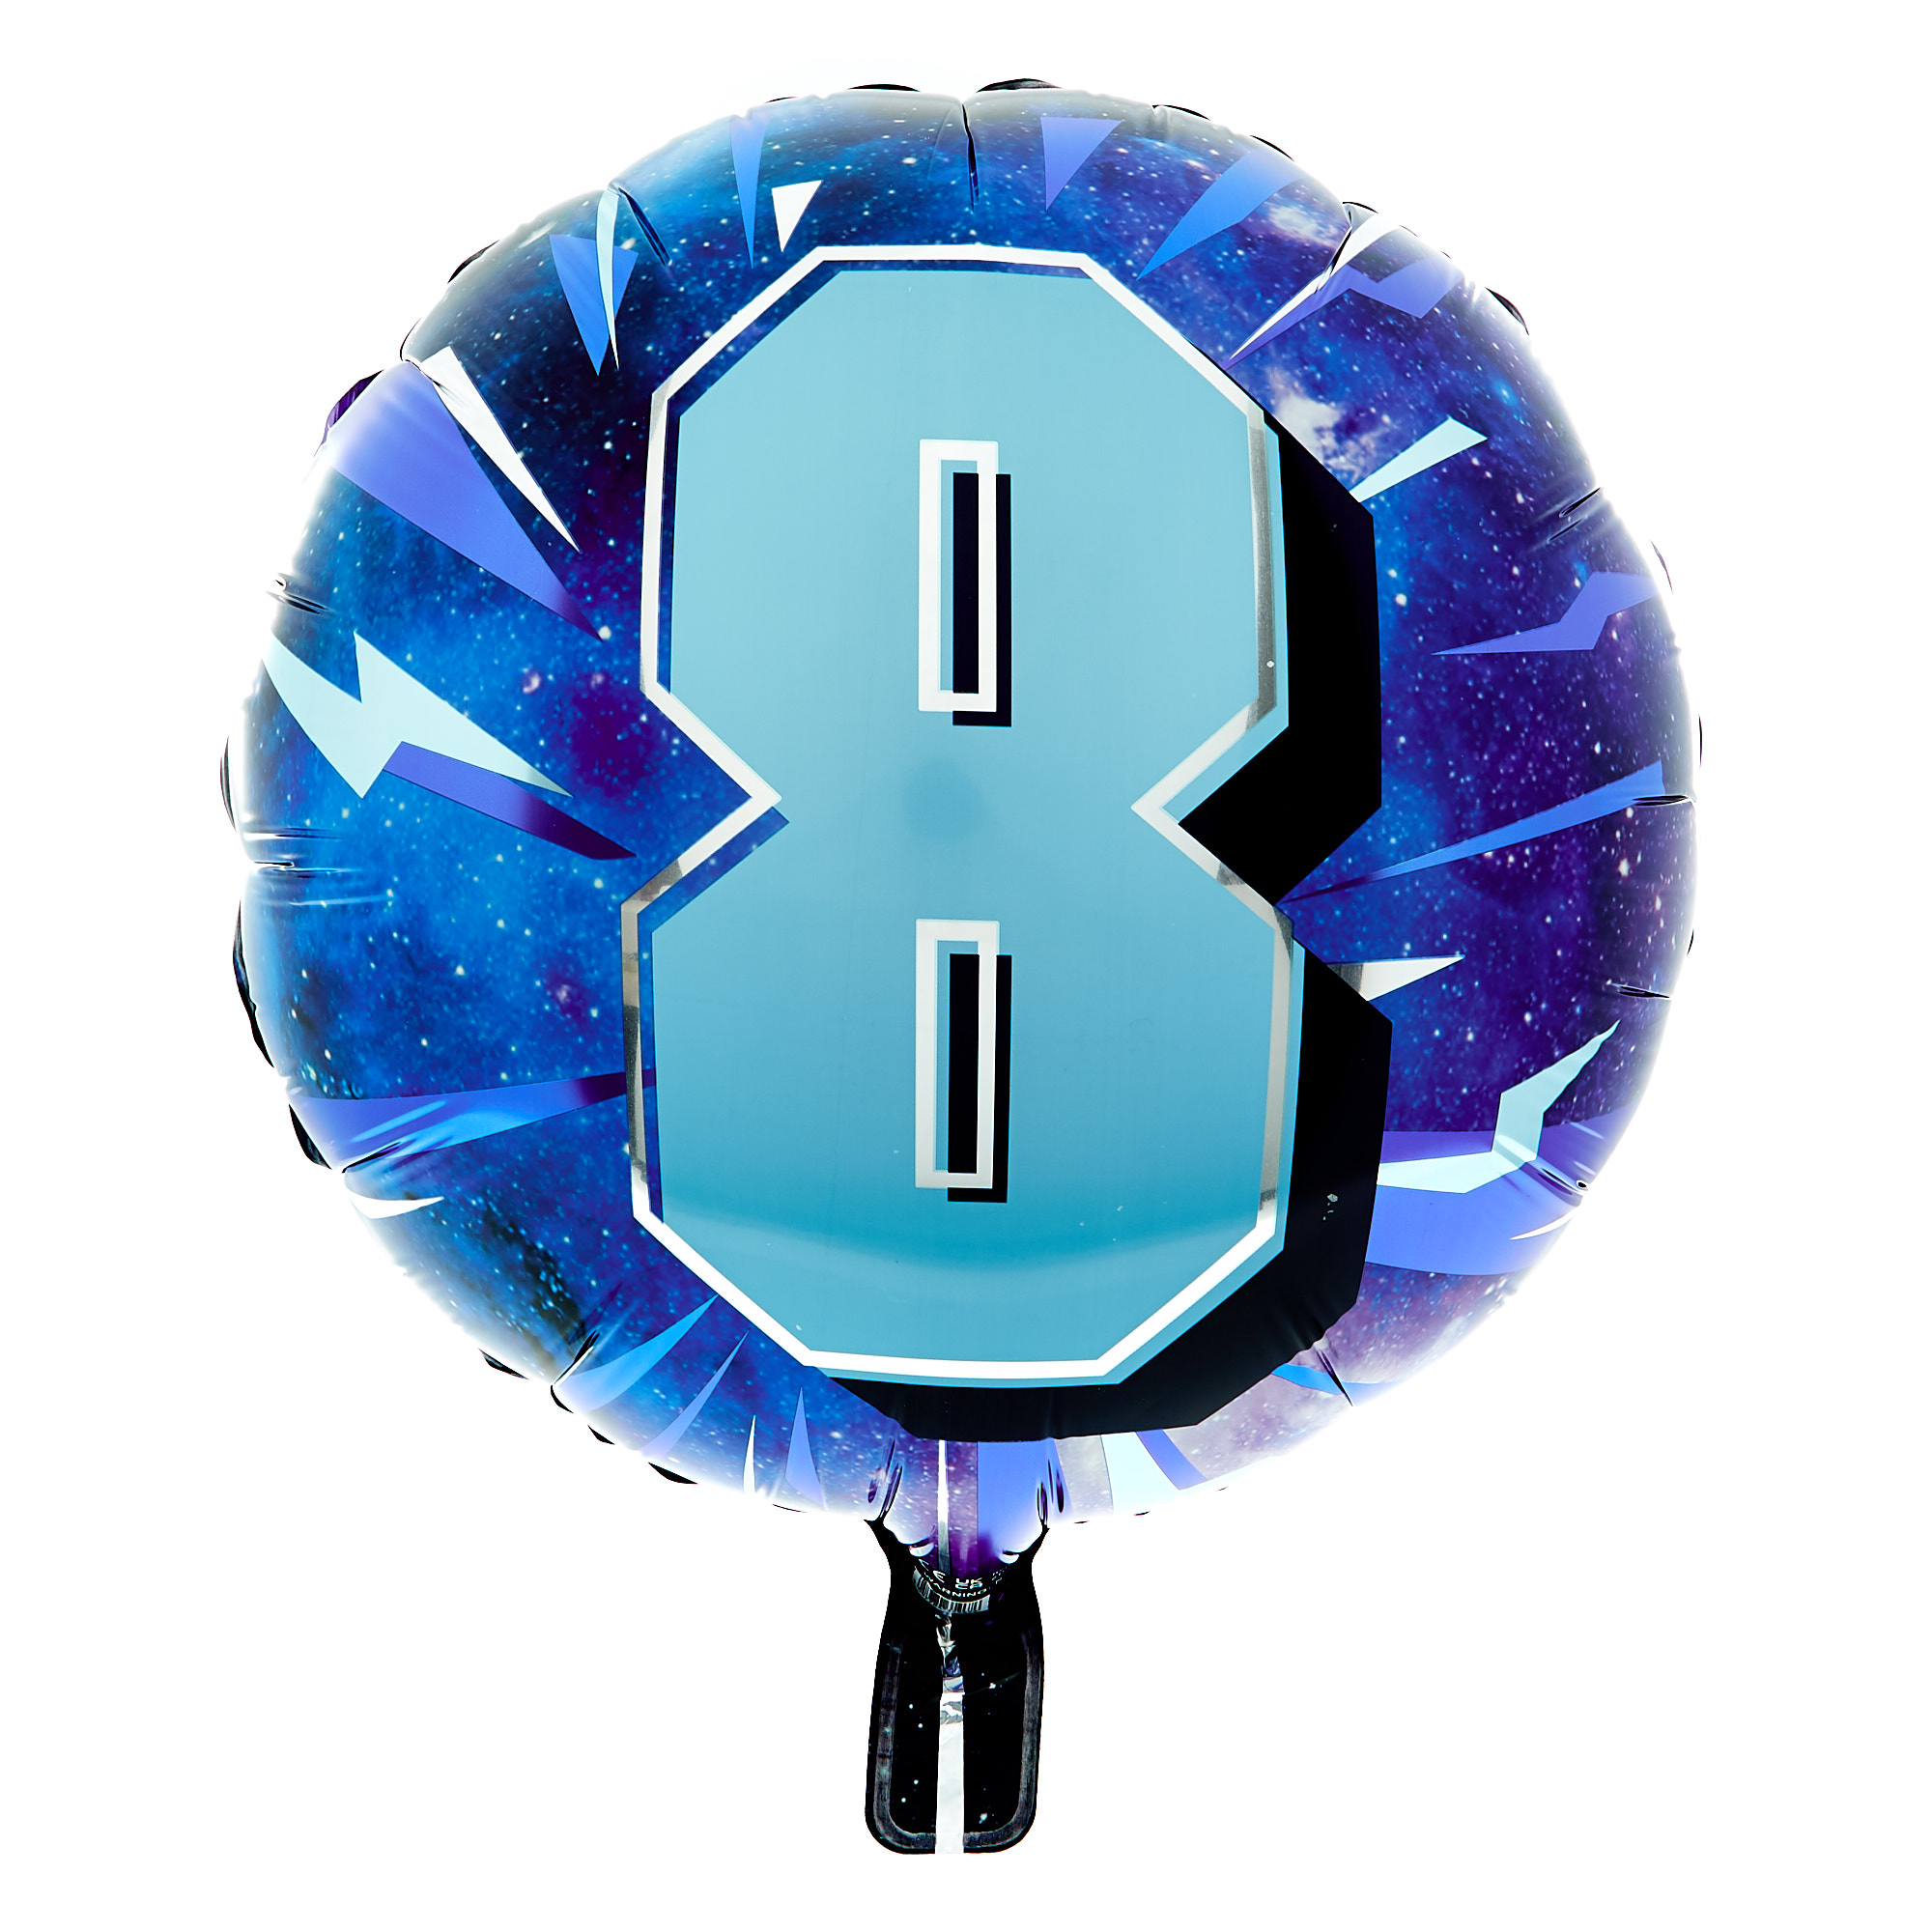 Buy Marvel Ultimate Spider-Man Foil Helium Balloon for GBP 3.99